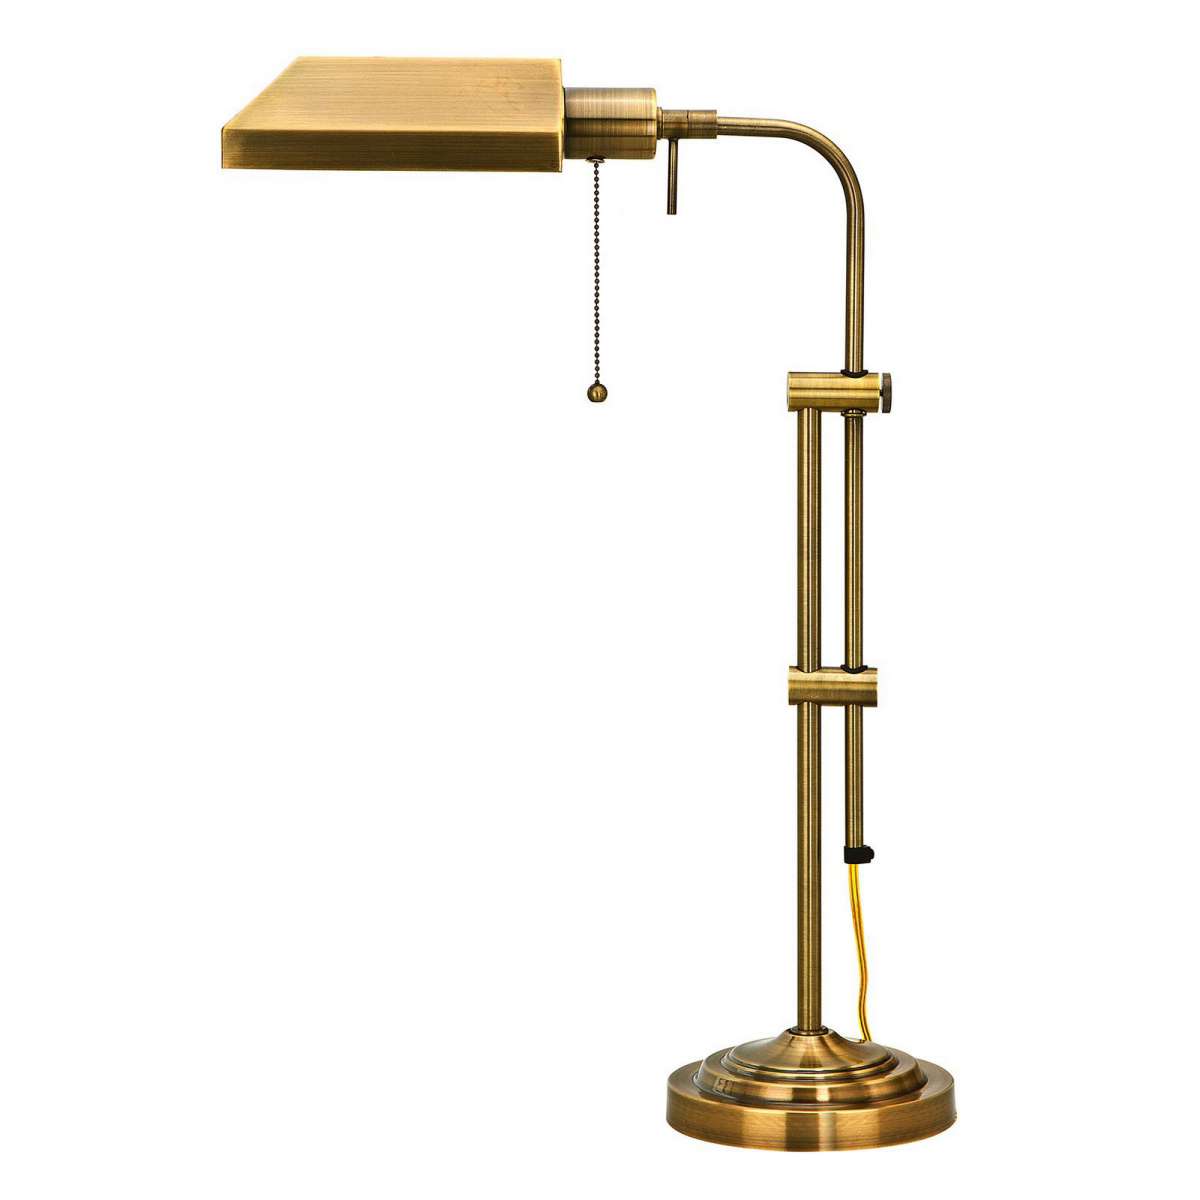 Metal Rectangular Desk Lamp With Adjustable Pole, Gold By Benzara